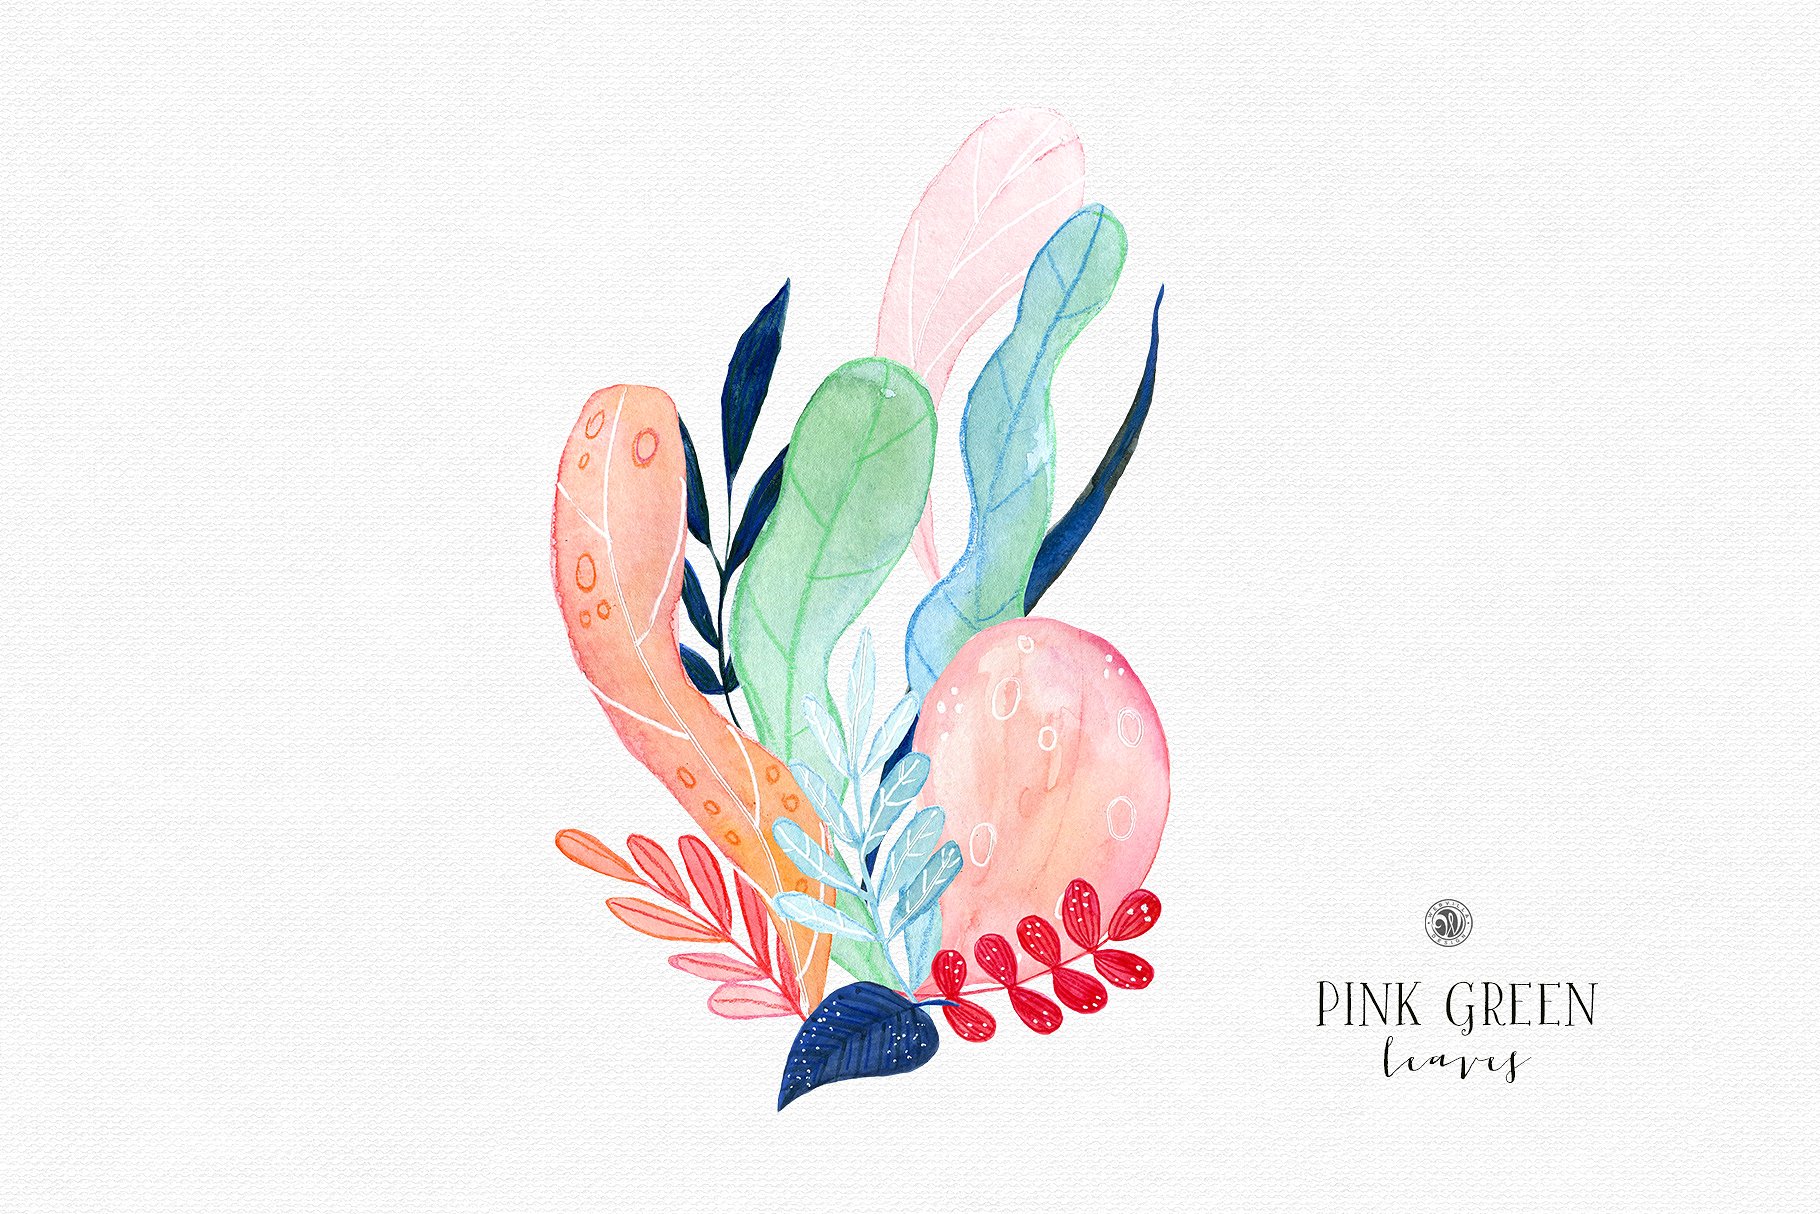 水彩手绘粉绿色叶子插画合集 Pink Green Leaves插图(3)